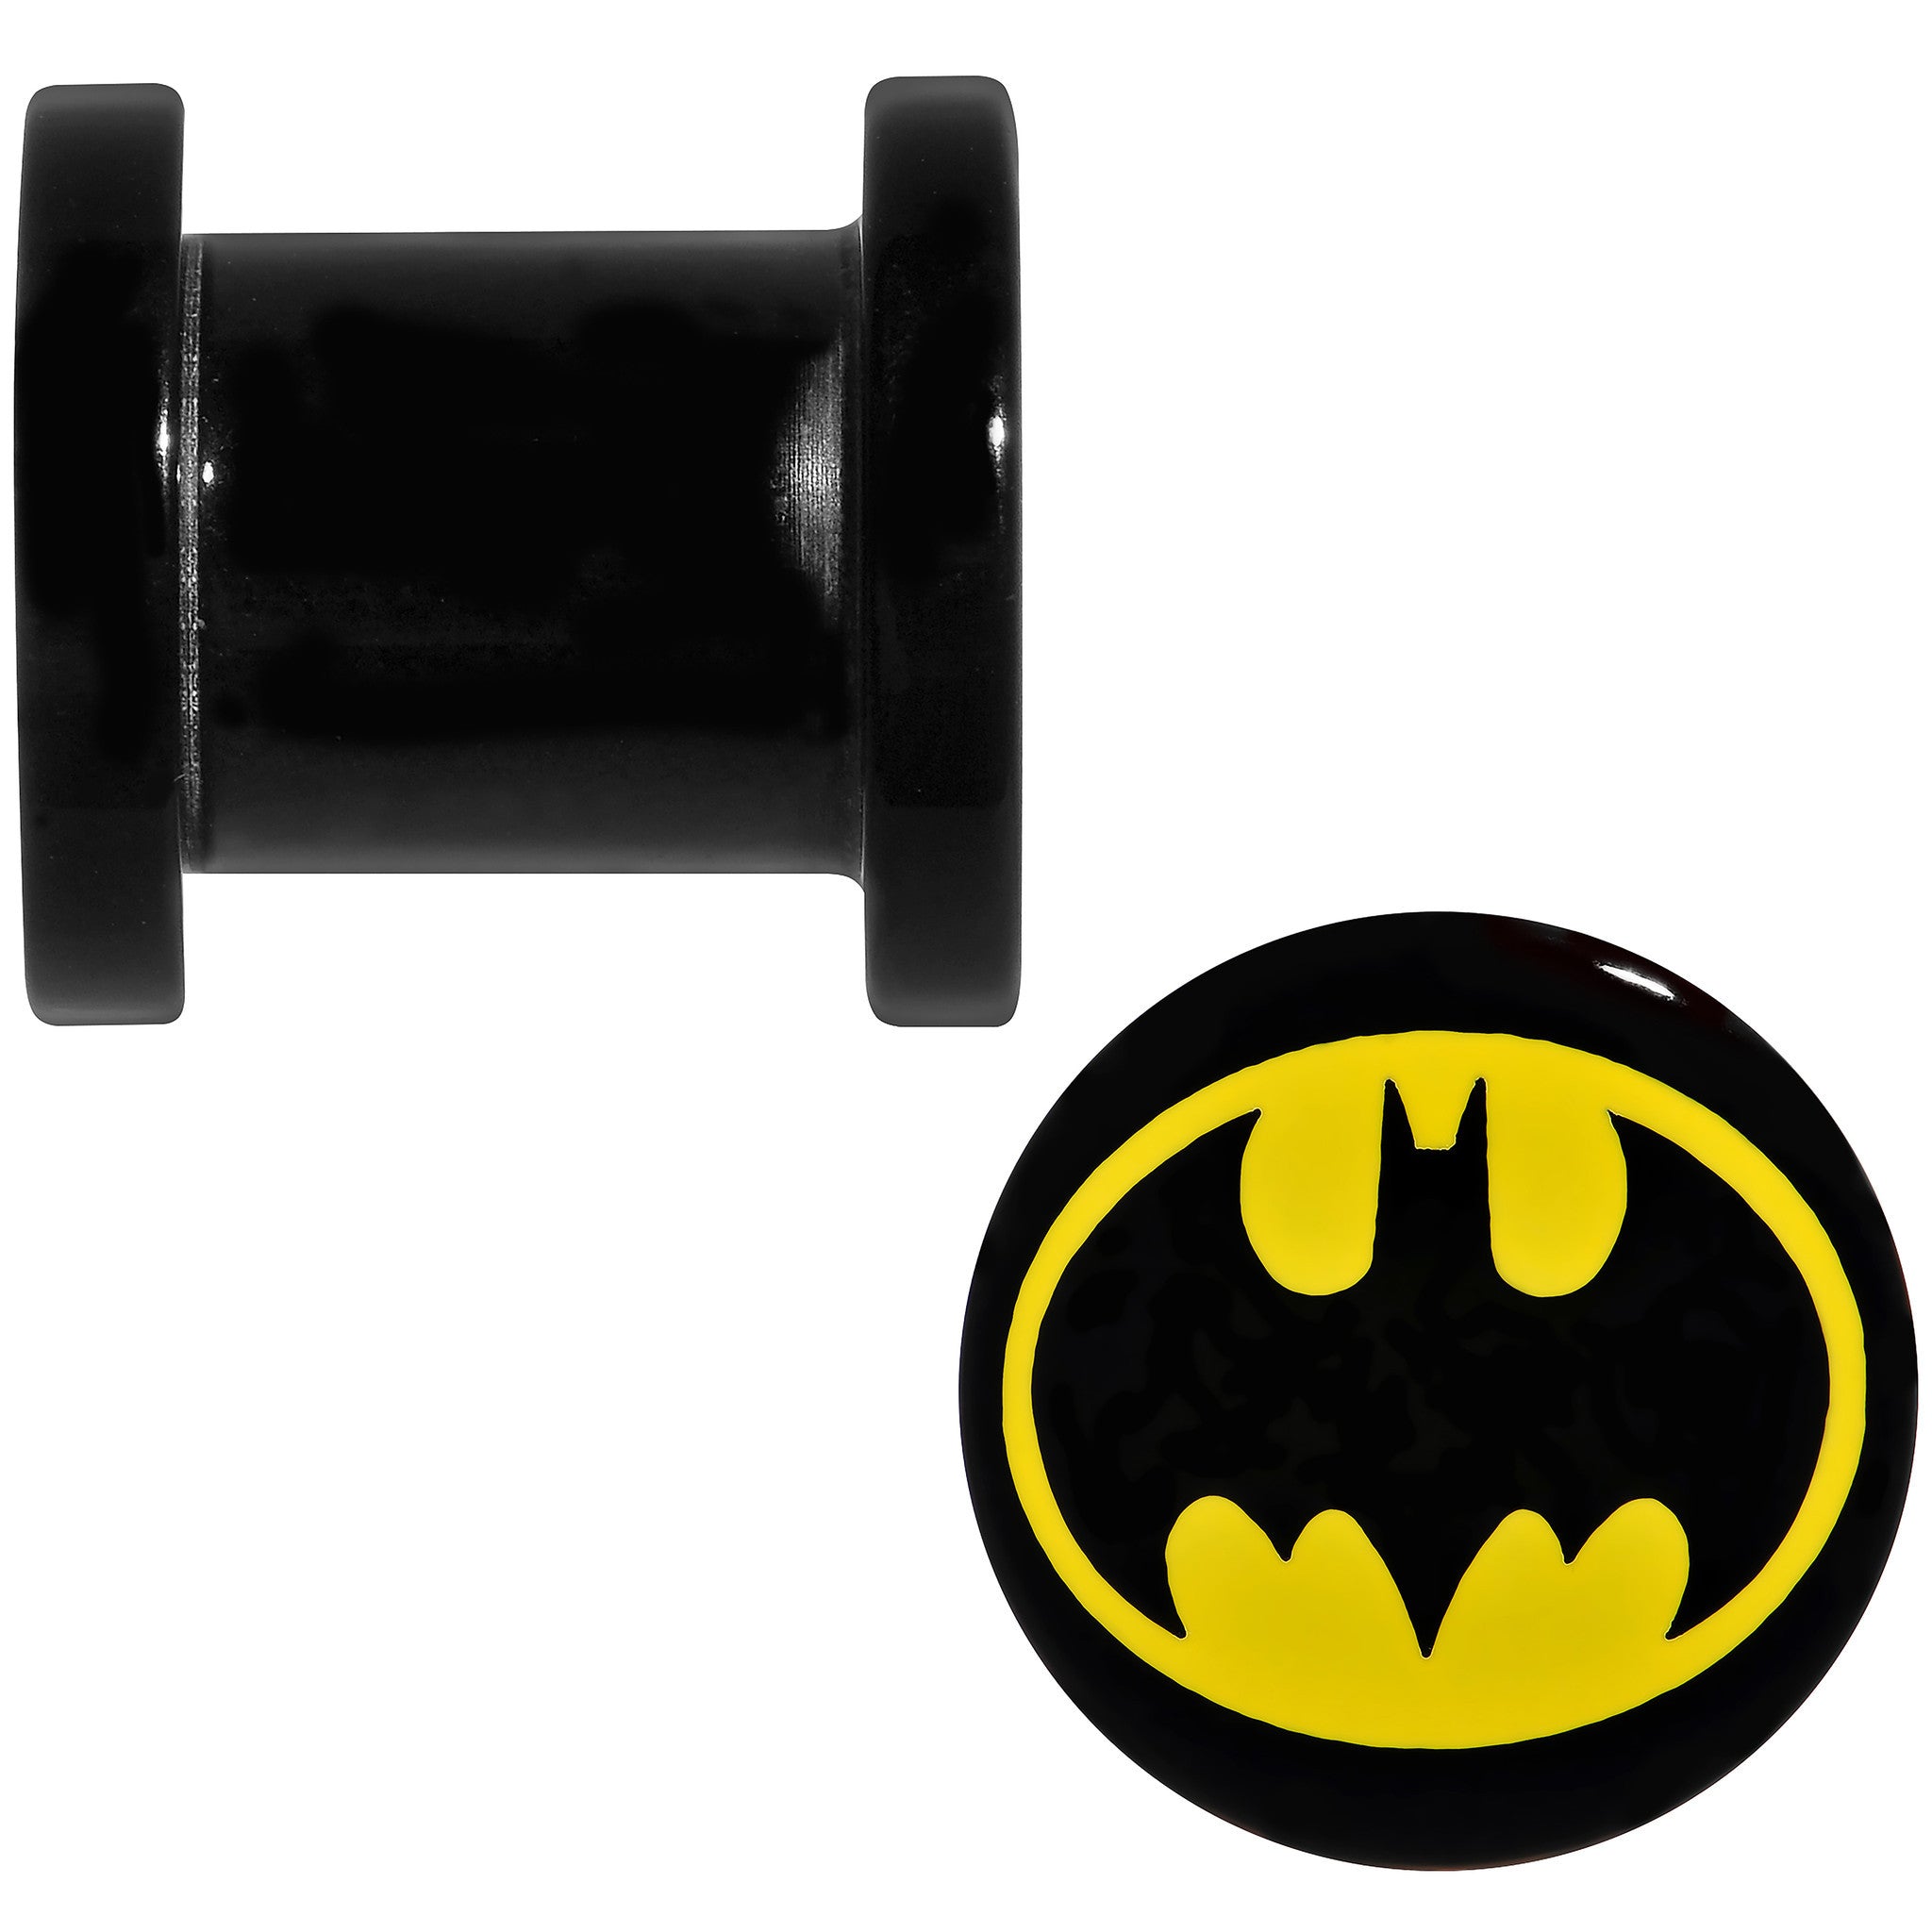 0 Gauge Black Acrylic Licensed Batman Logo Screw Fit Plug Set